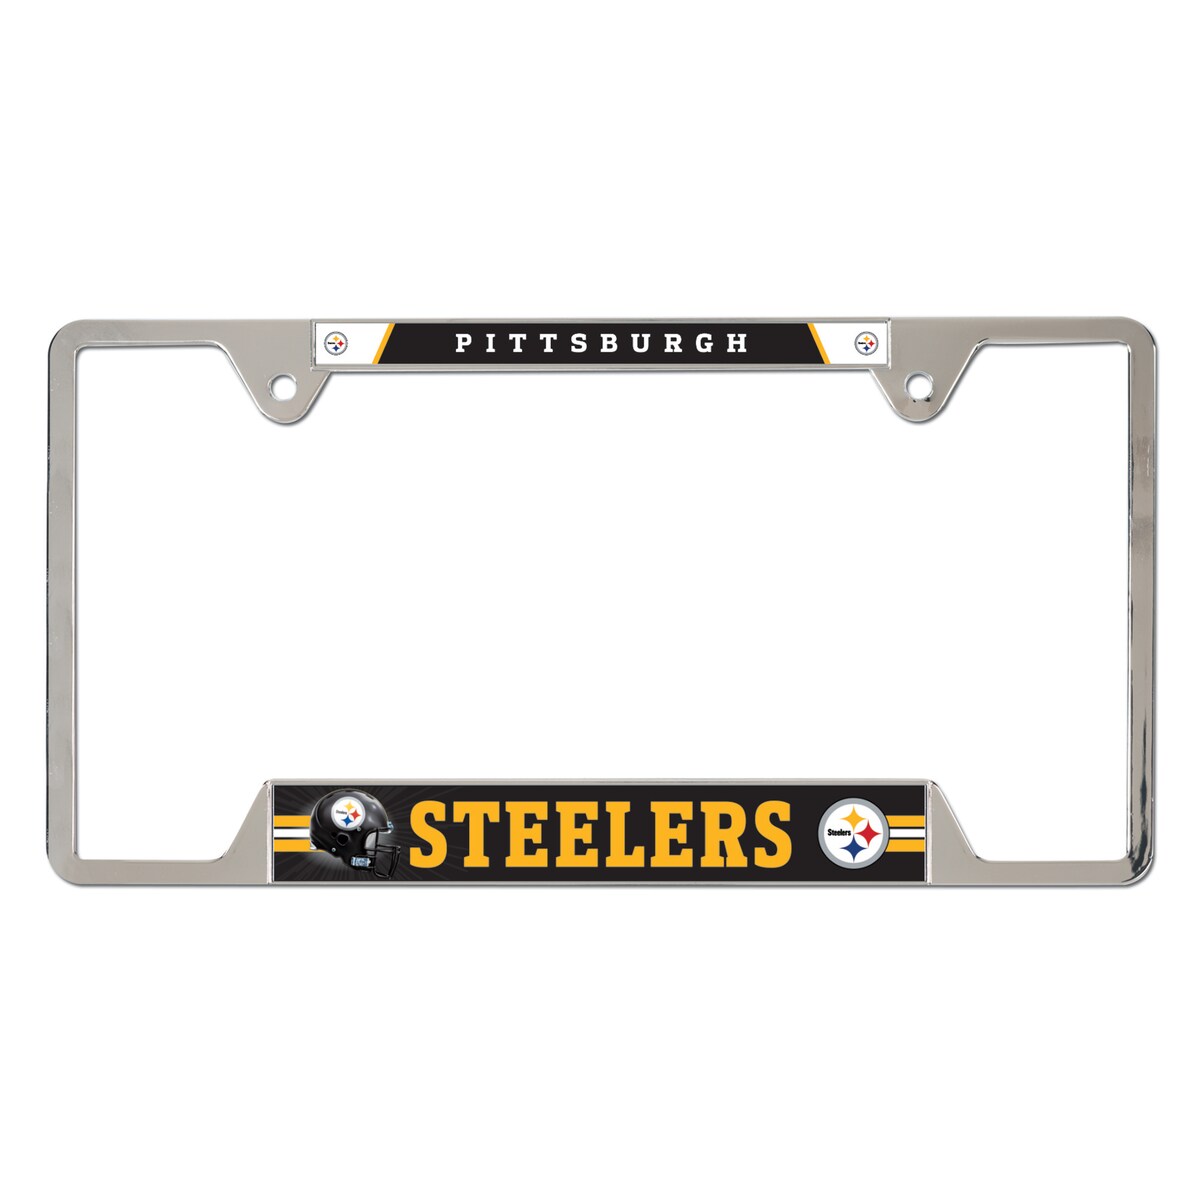 NFL スティーラーズ カー用品・カーアクセサリー ウィンクラフト (Metal License Plate Frame - NEW)